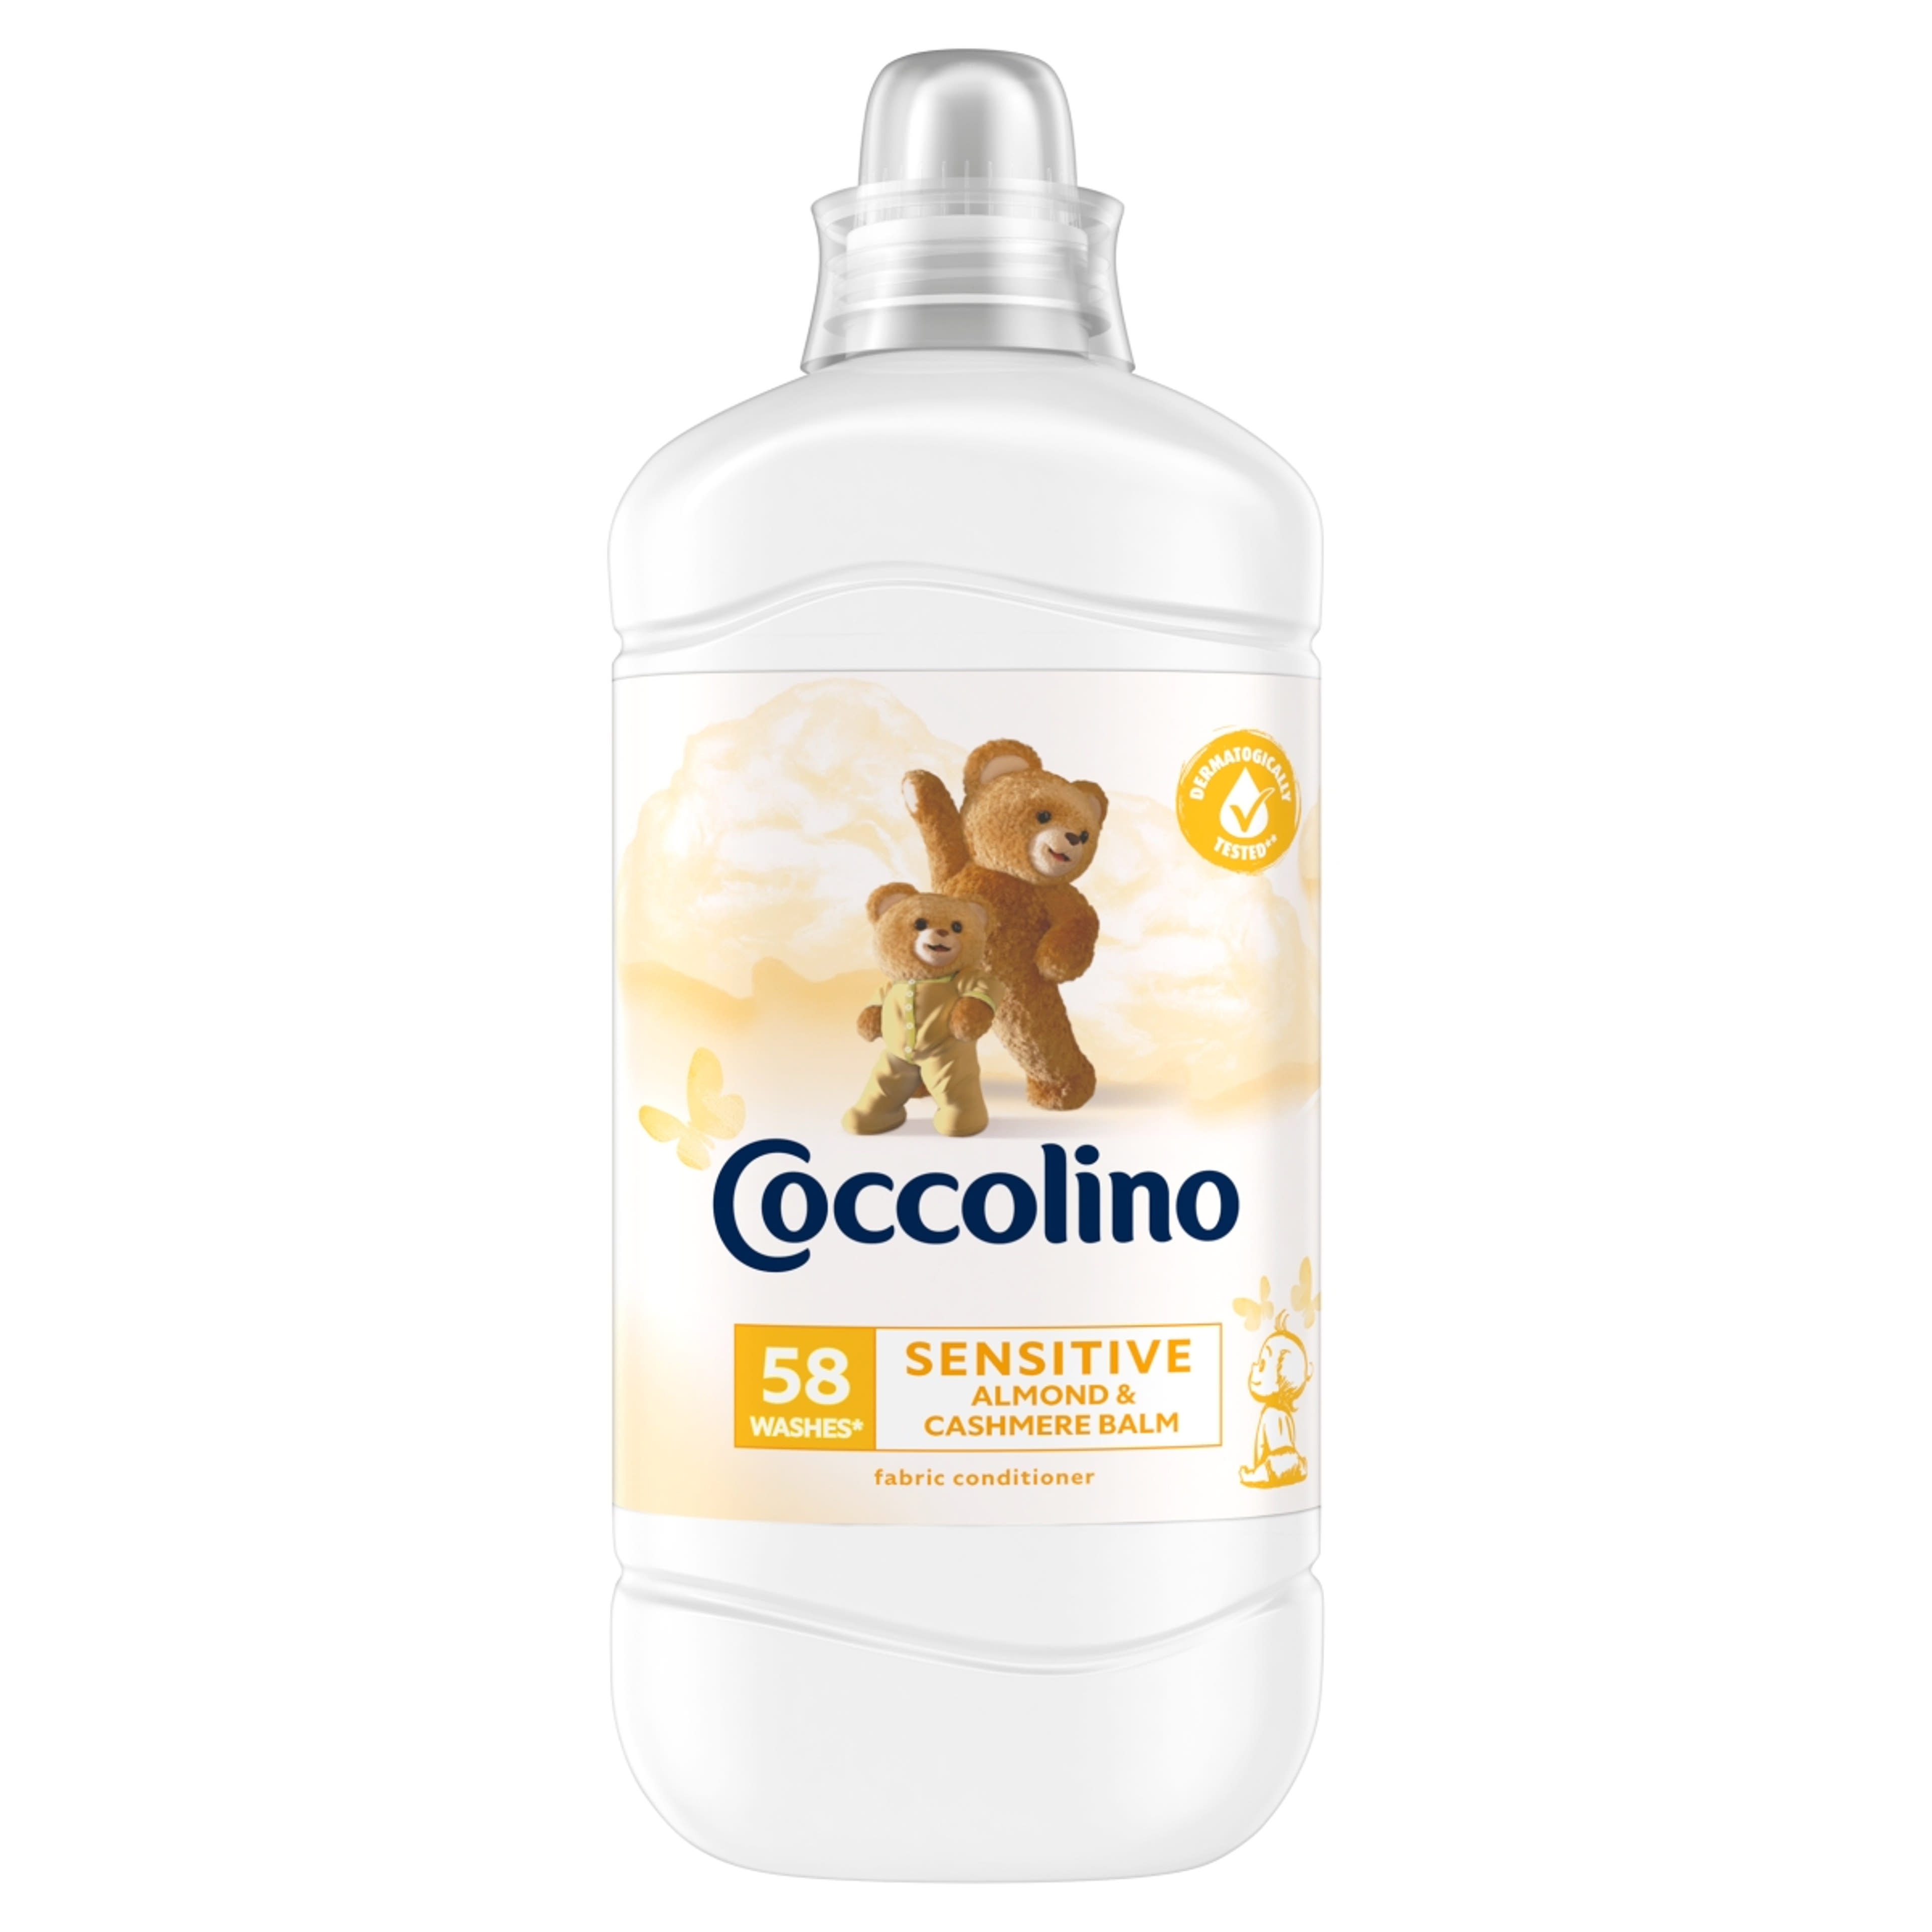 Coccolino Sensitive Almond & Cashmere Balm öblítőkoncentrátum 58 mosás - 1450 ml